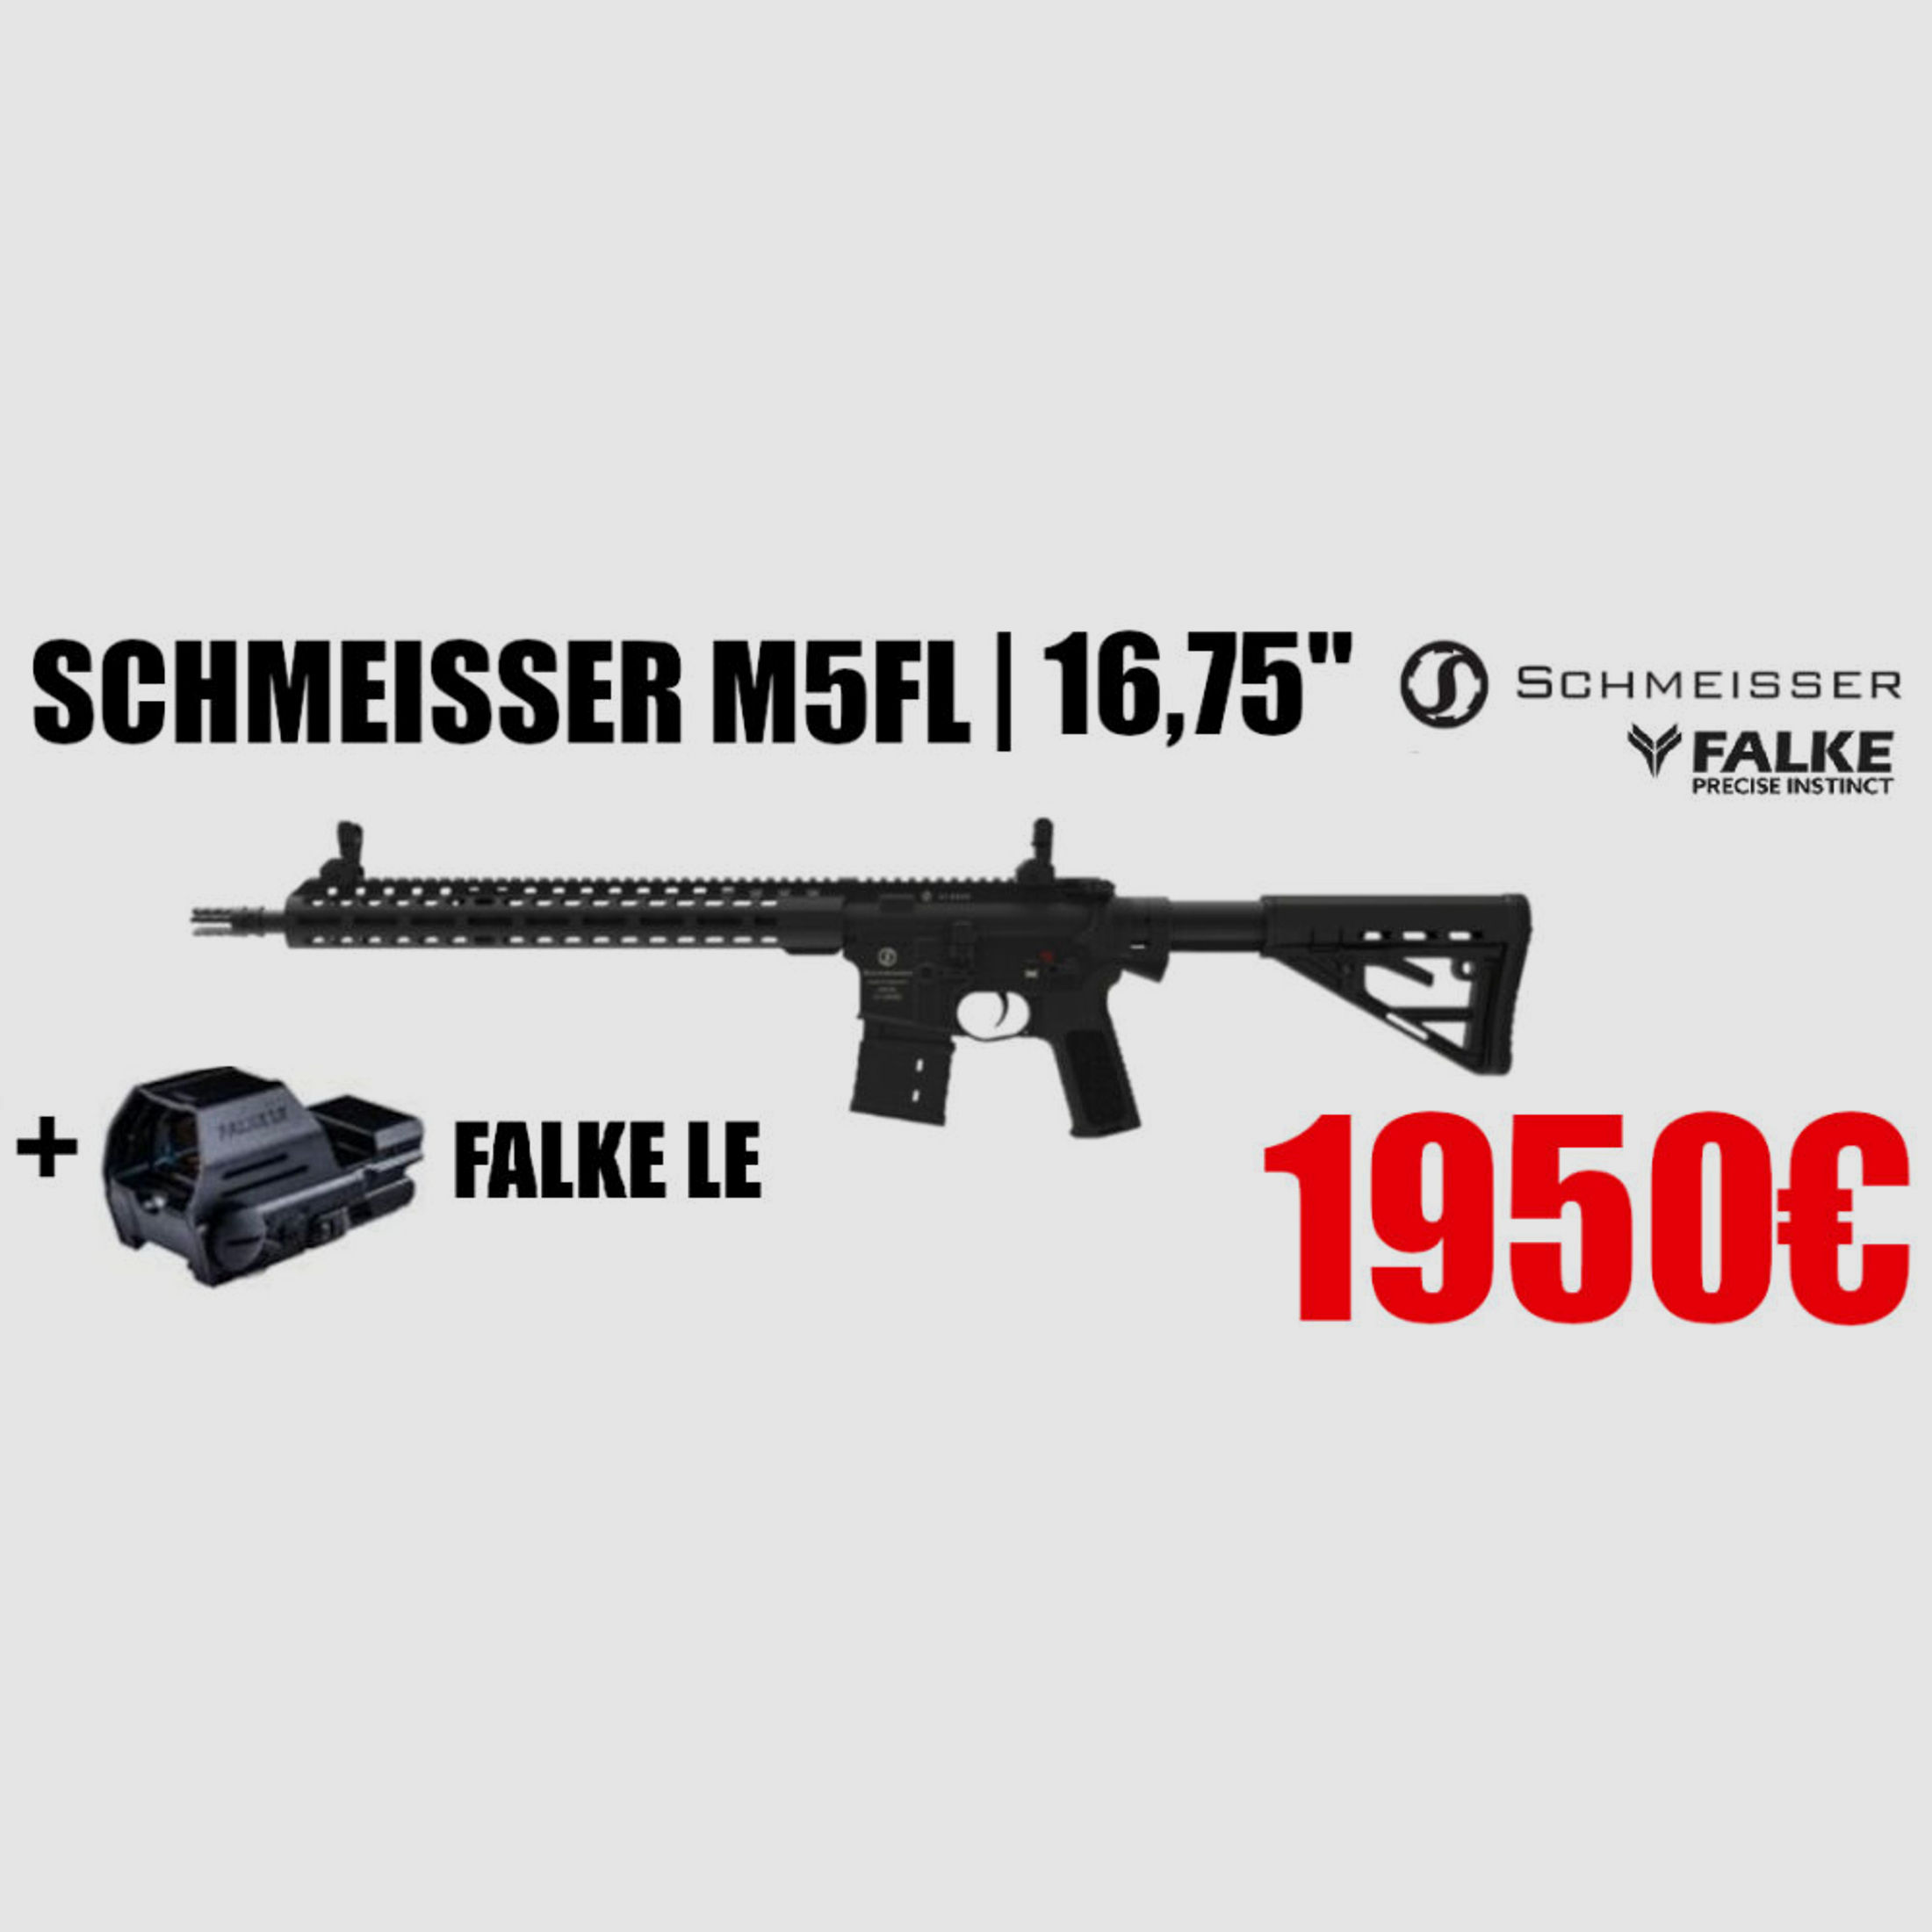 Schmeisser M5FL 16,75" AR15 223Rem + Falke LE im Frühjahrsangebot	 UVP: 2850€